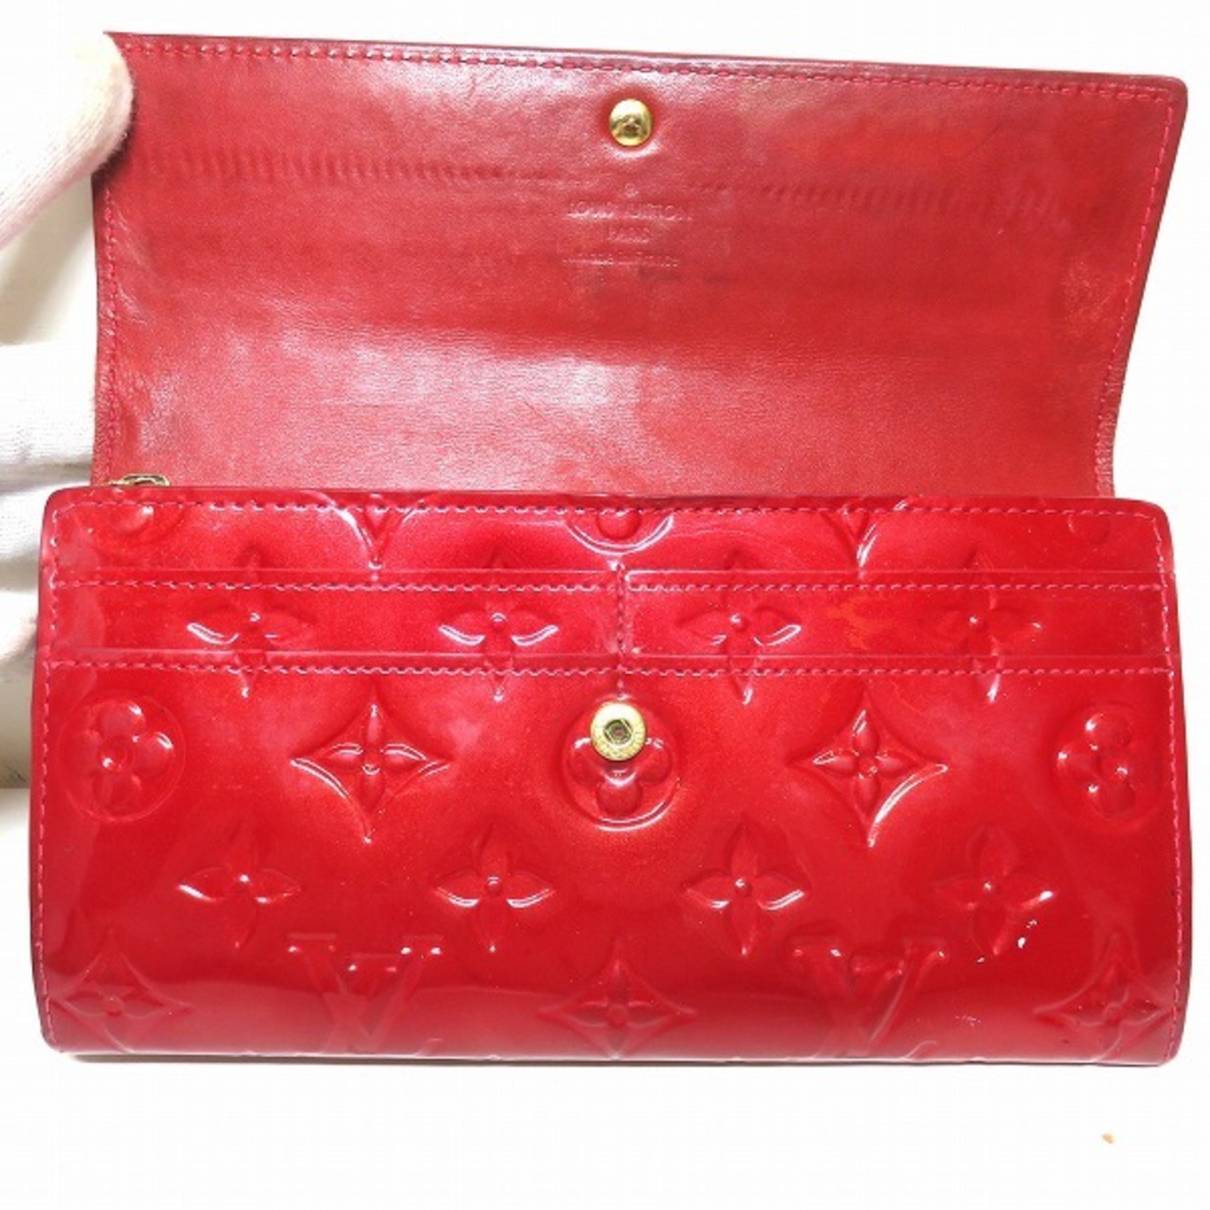 Buy Louis Vuitton Patent leather wallet online